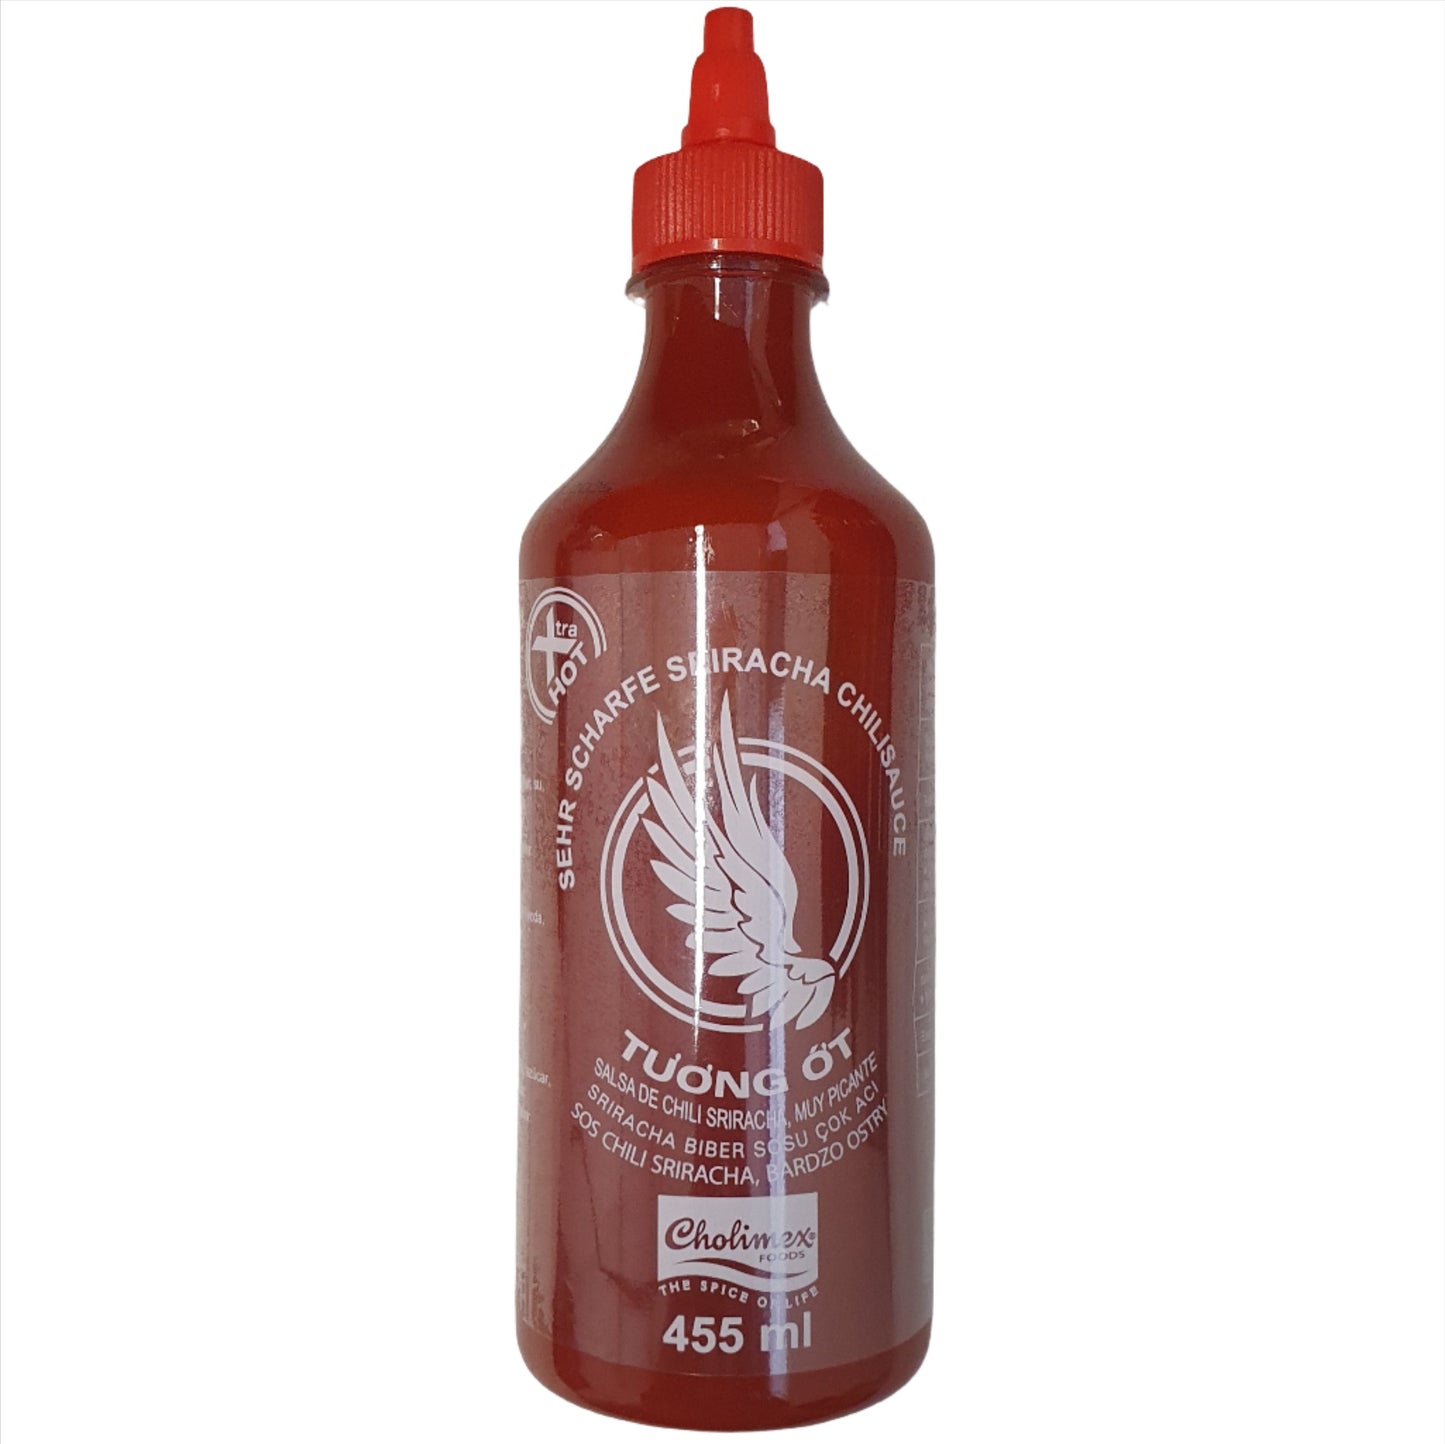 Cholimex Sriracha Chilisauce sehr scharf 455ml - Worldster Markt e.K.